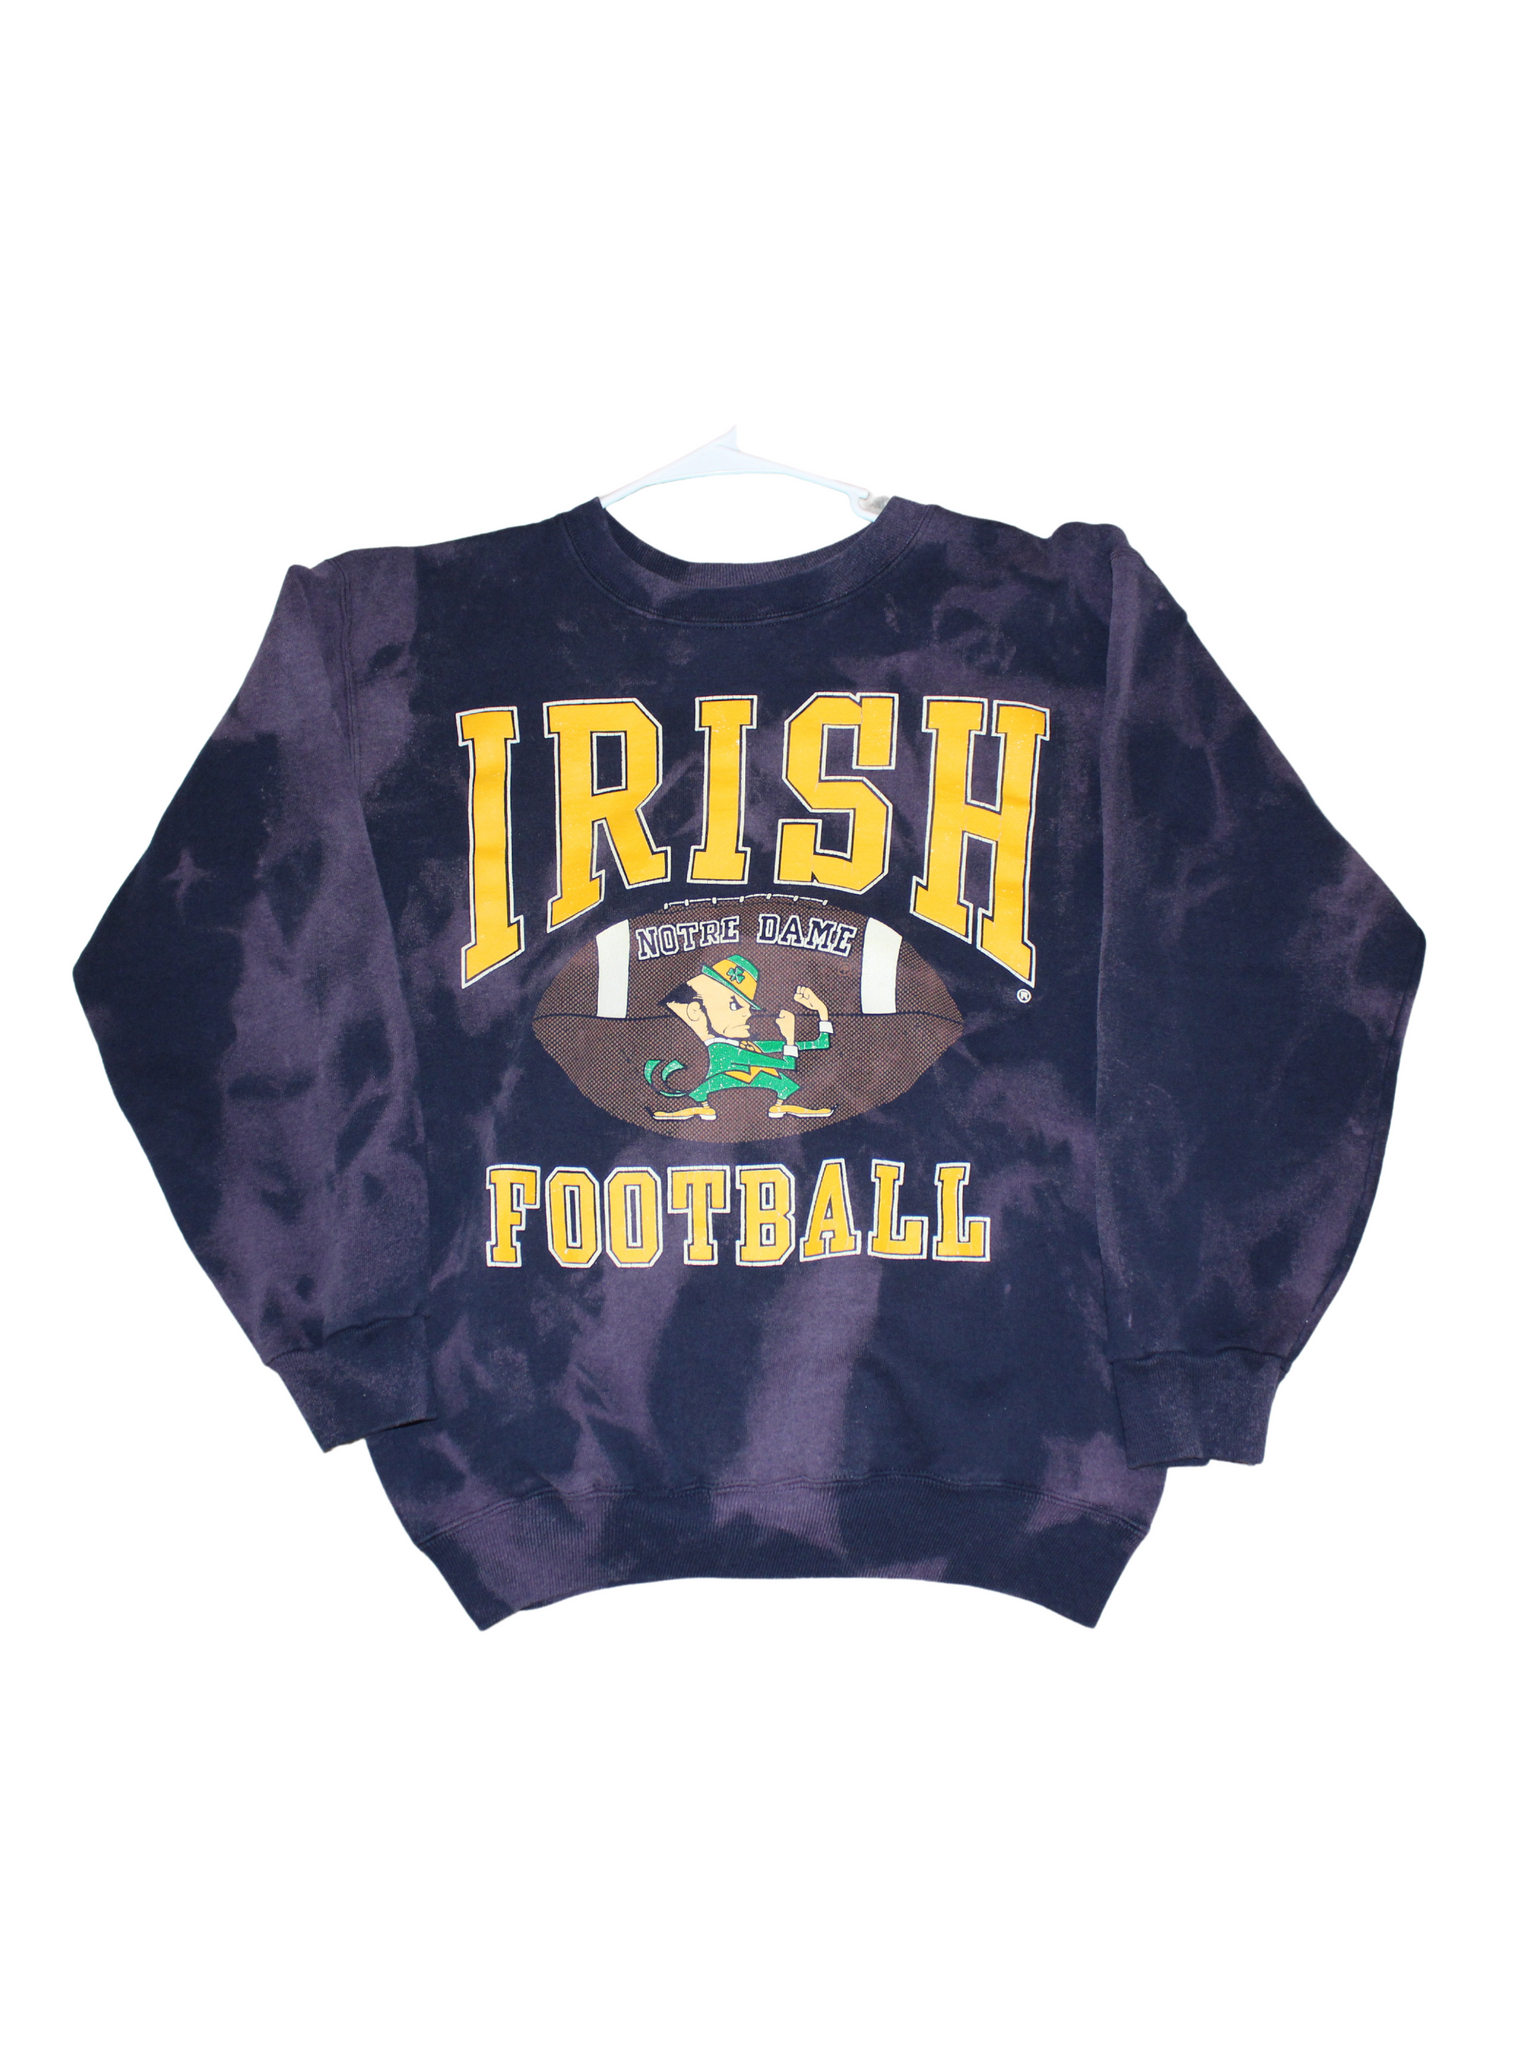 Vintage Notre Dame Football Bleached Sweatshirt